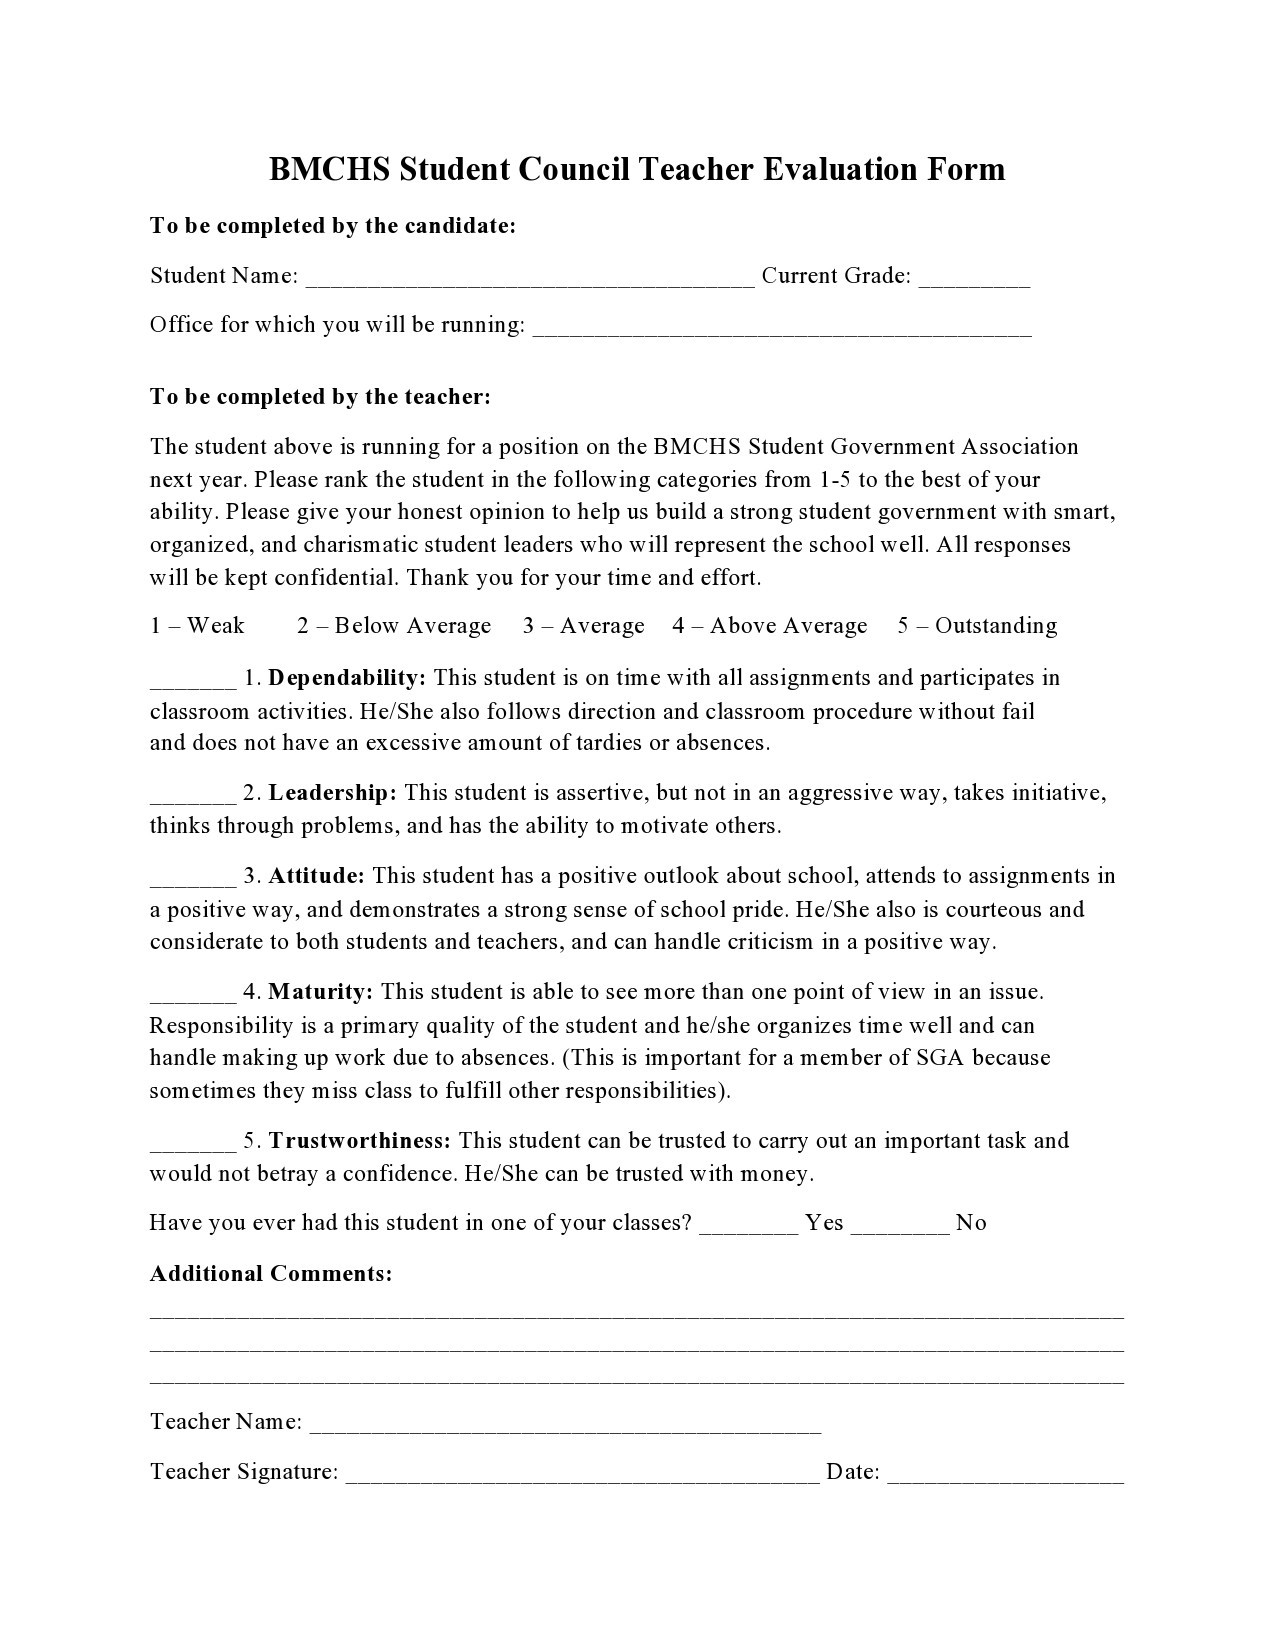 Free teacher evaluation form 15